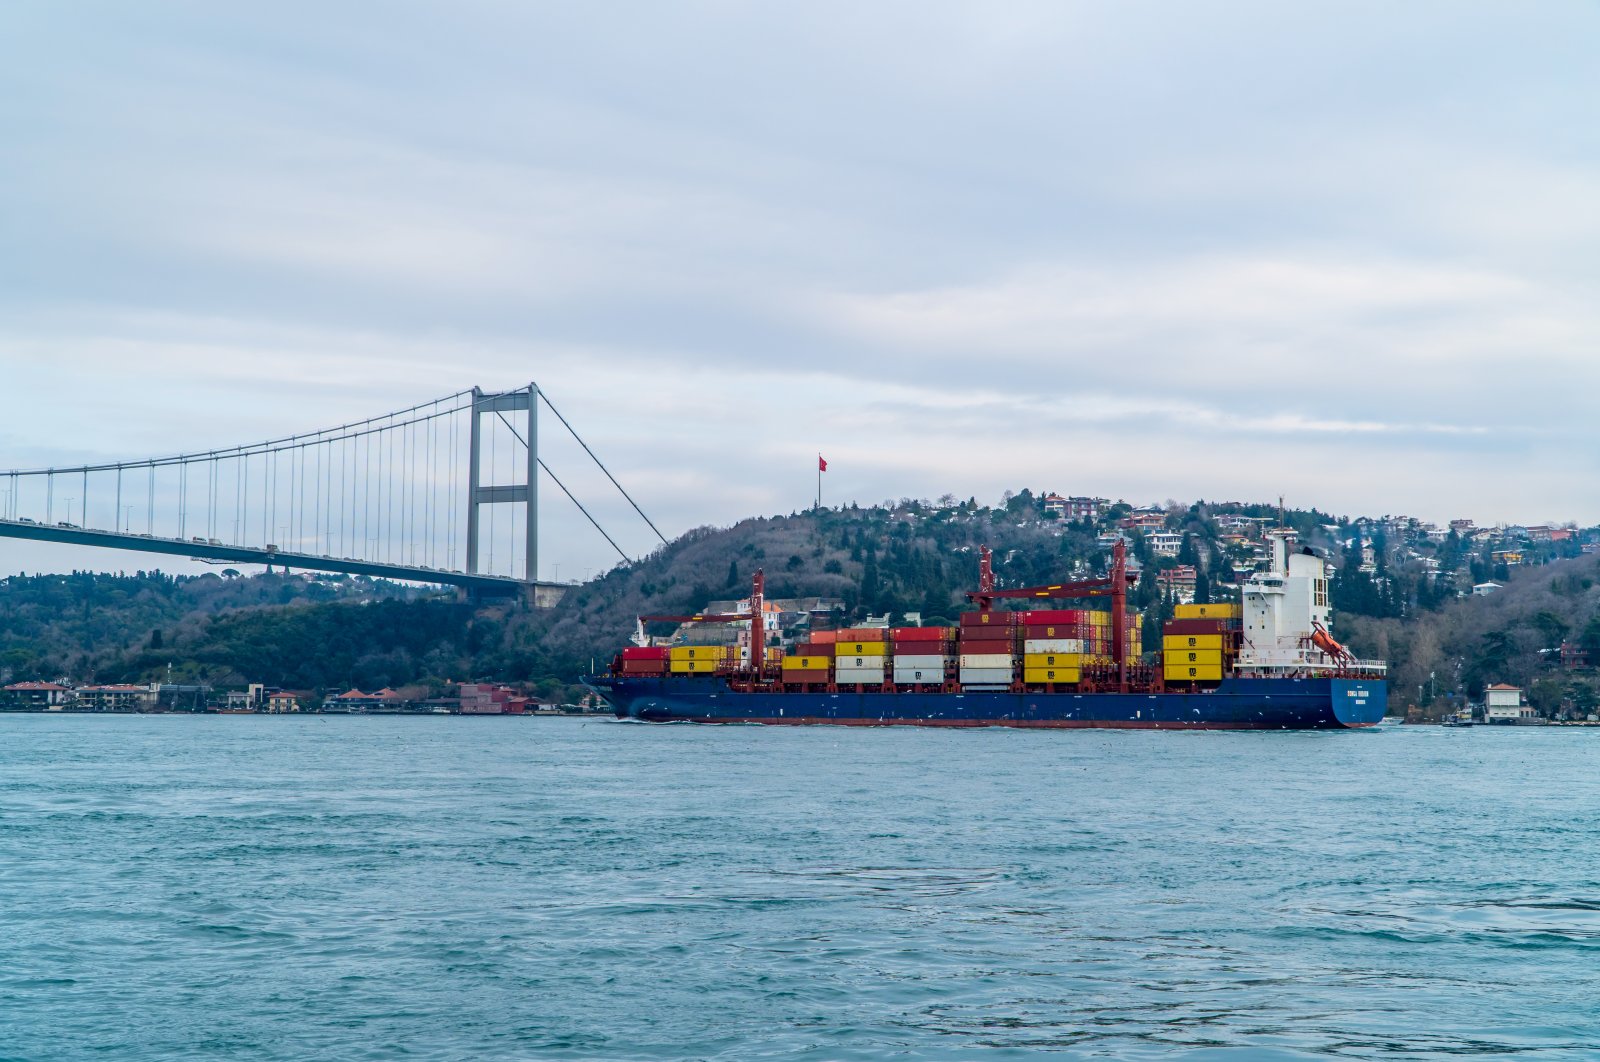 A container ship sails through Bosporus passing under the Fatih Sultan Mehmet Bridge, in Istanbul, Turkey, Feb. 19, 2021. (Shutterstock Photo)